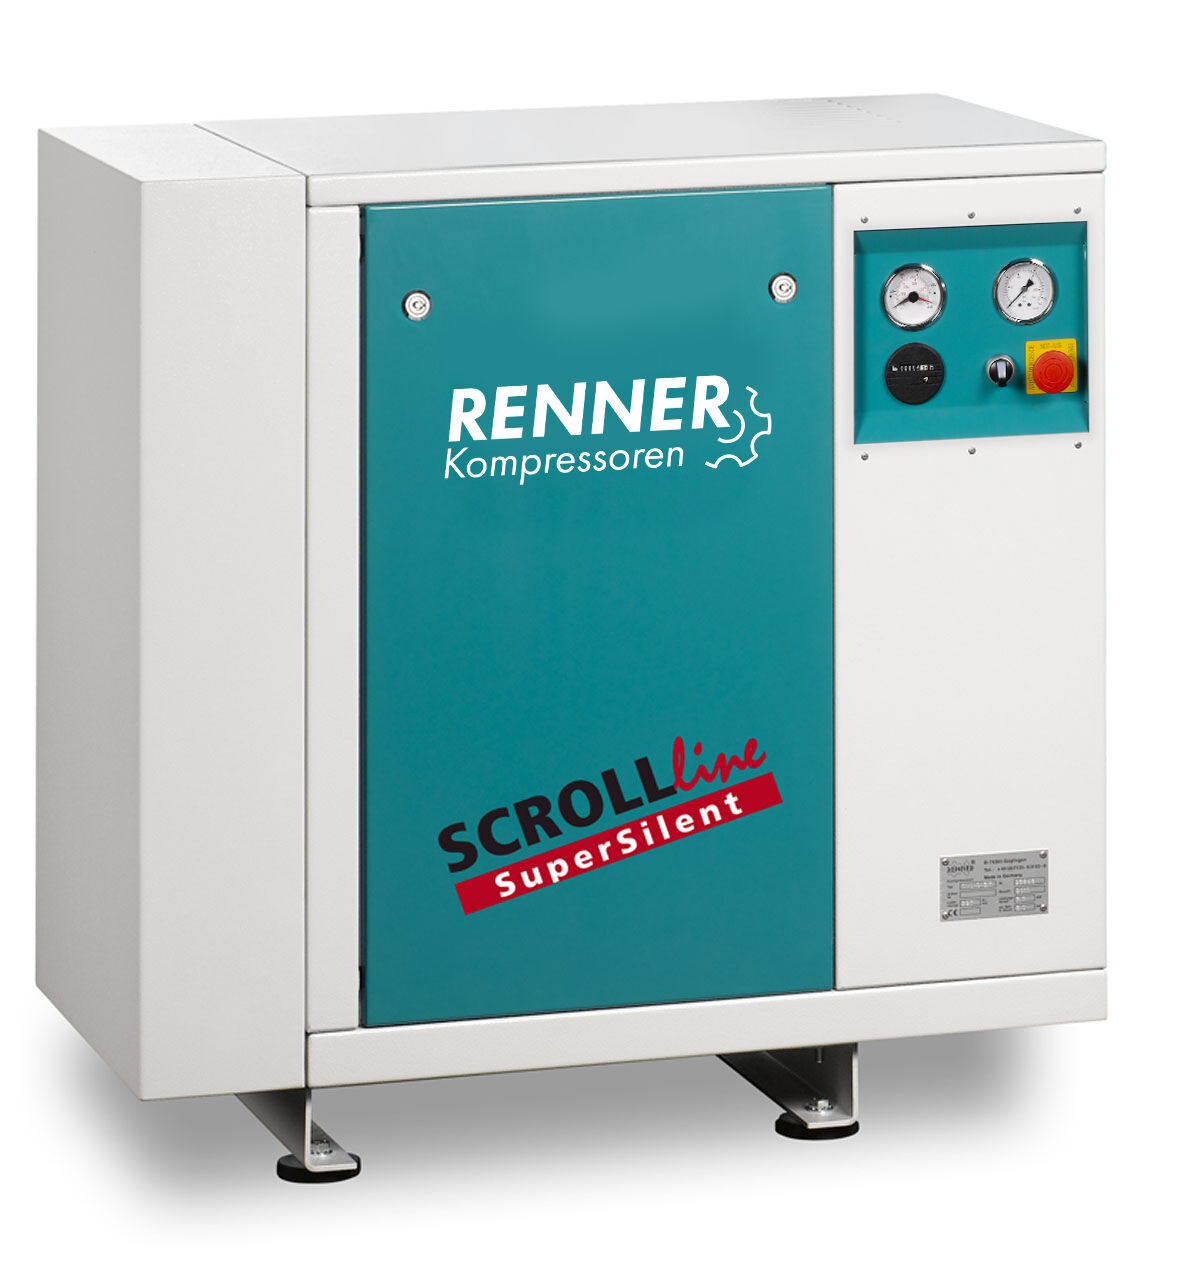 RENNER-Kompressor SL-S 7,5 - SuperSilent ölfreier Scrollkompressor